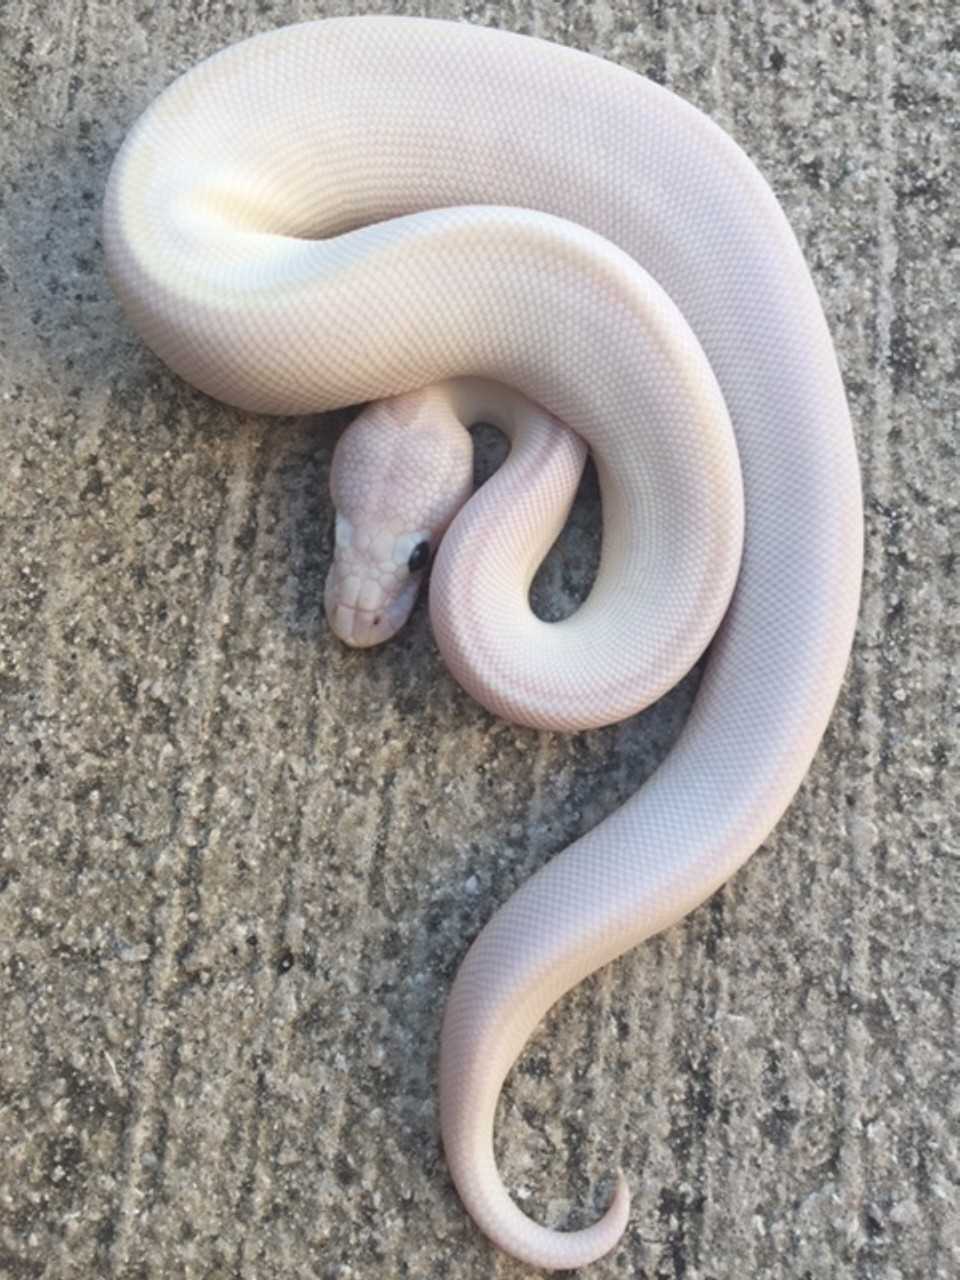 Cute albino ball python